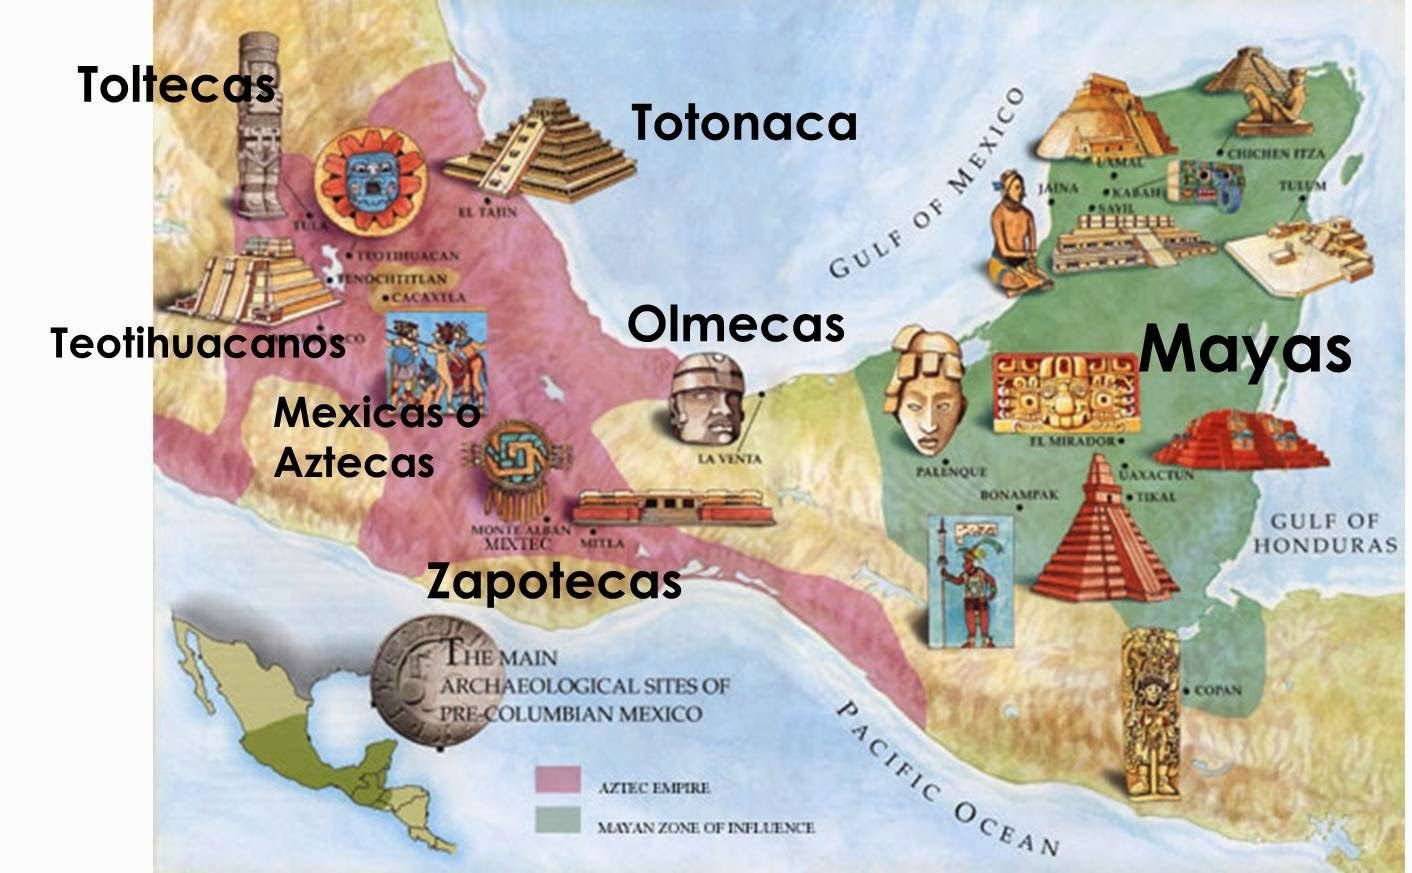 Culturas Mesoamericanas